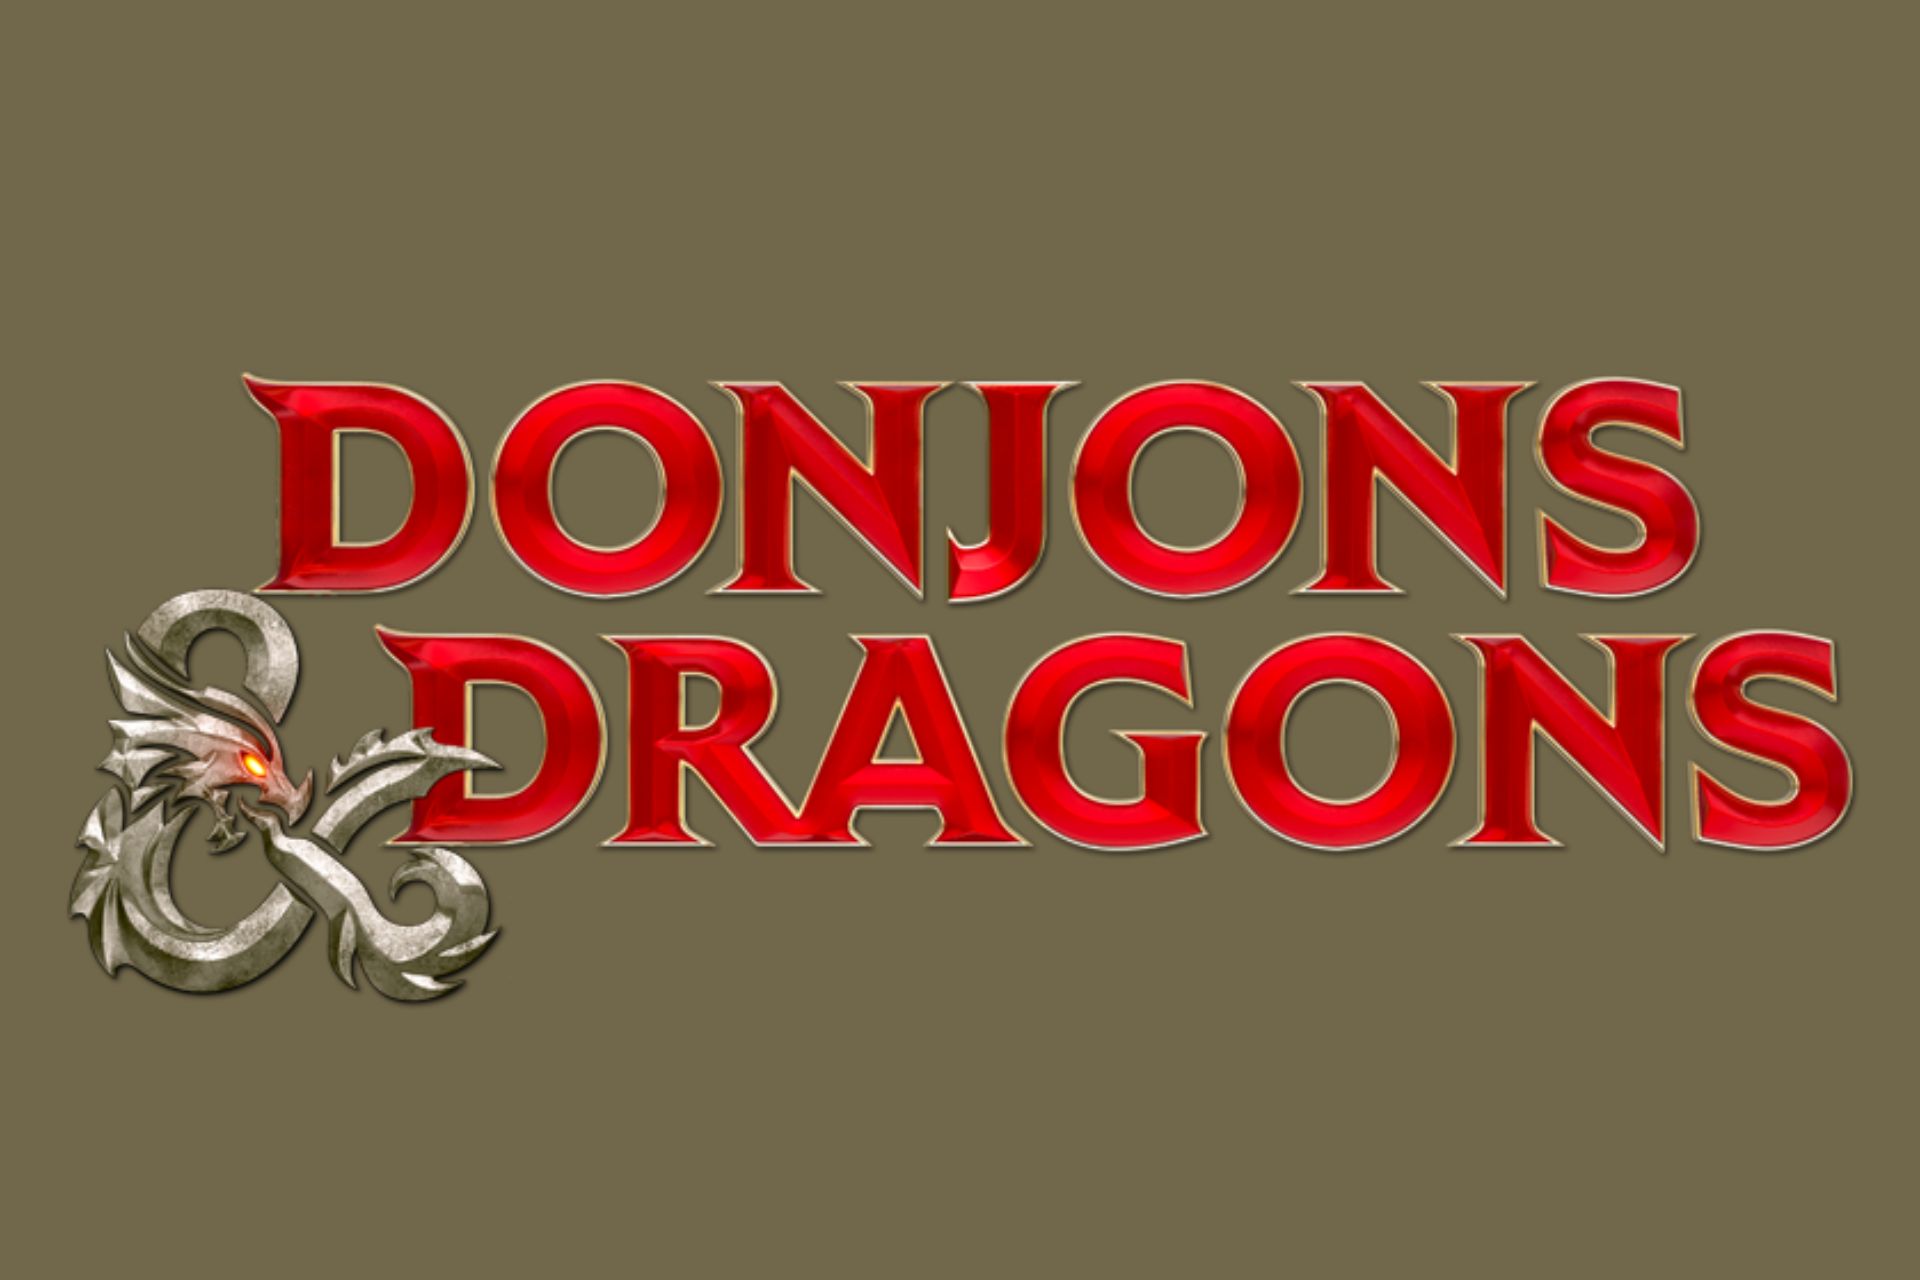 Donjons et Dragons